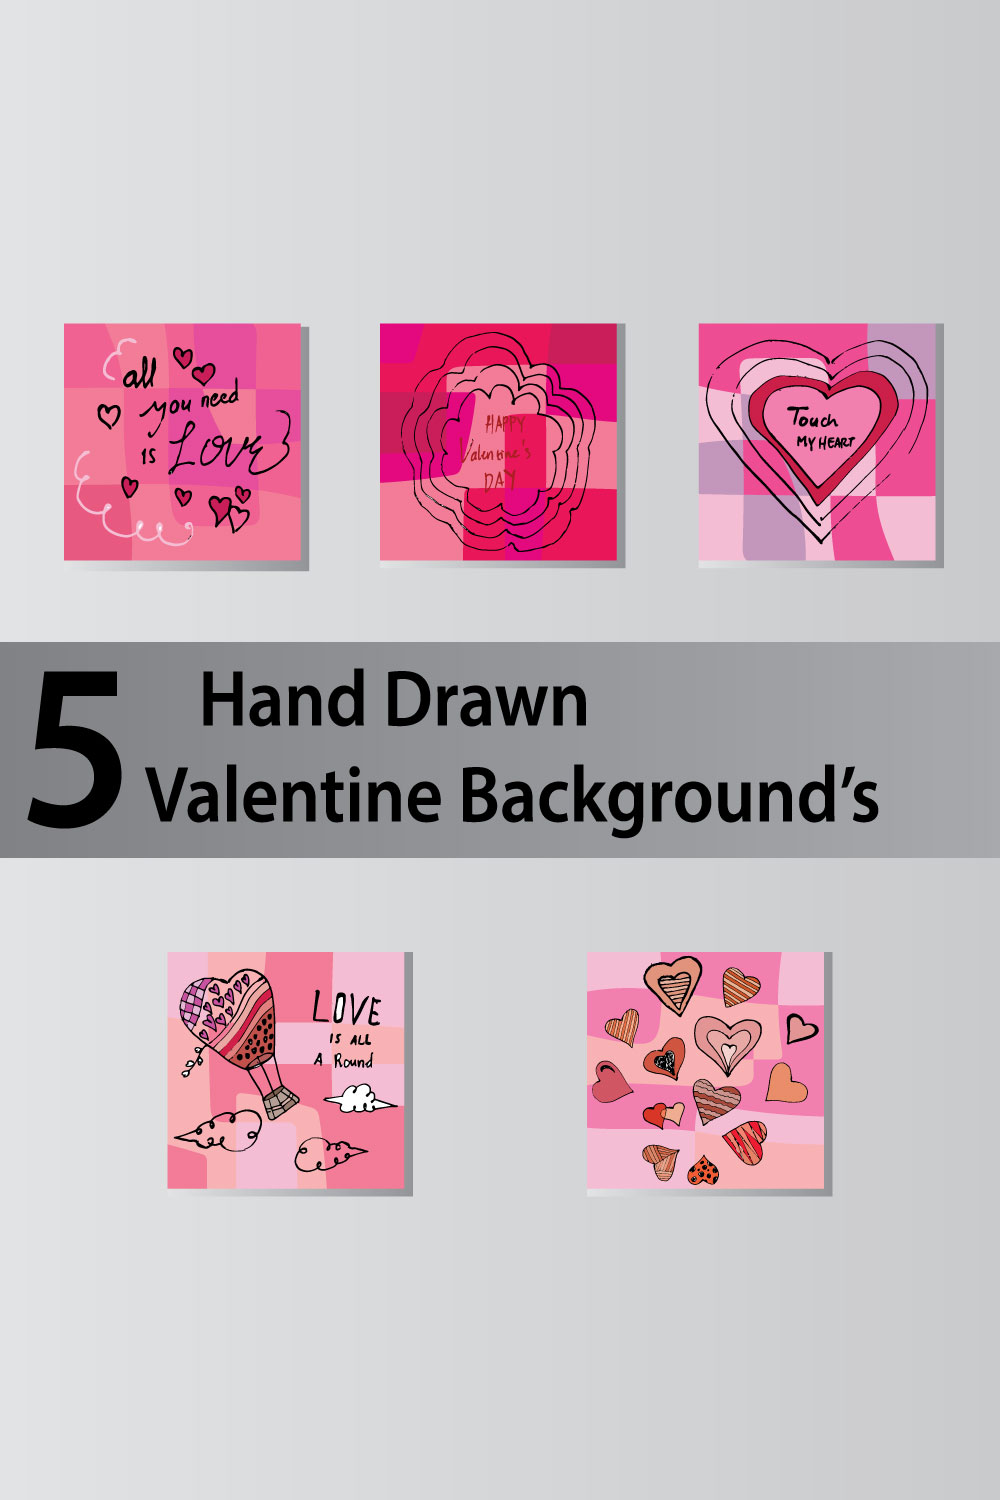 5 Hand Drawn Valentine Background's pinterest preview image.